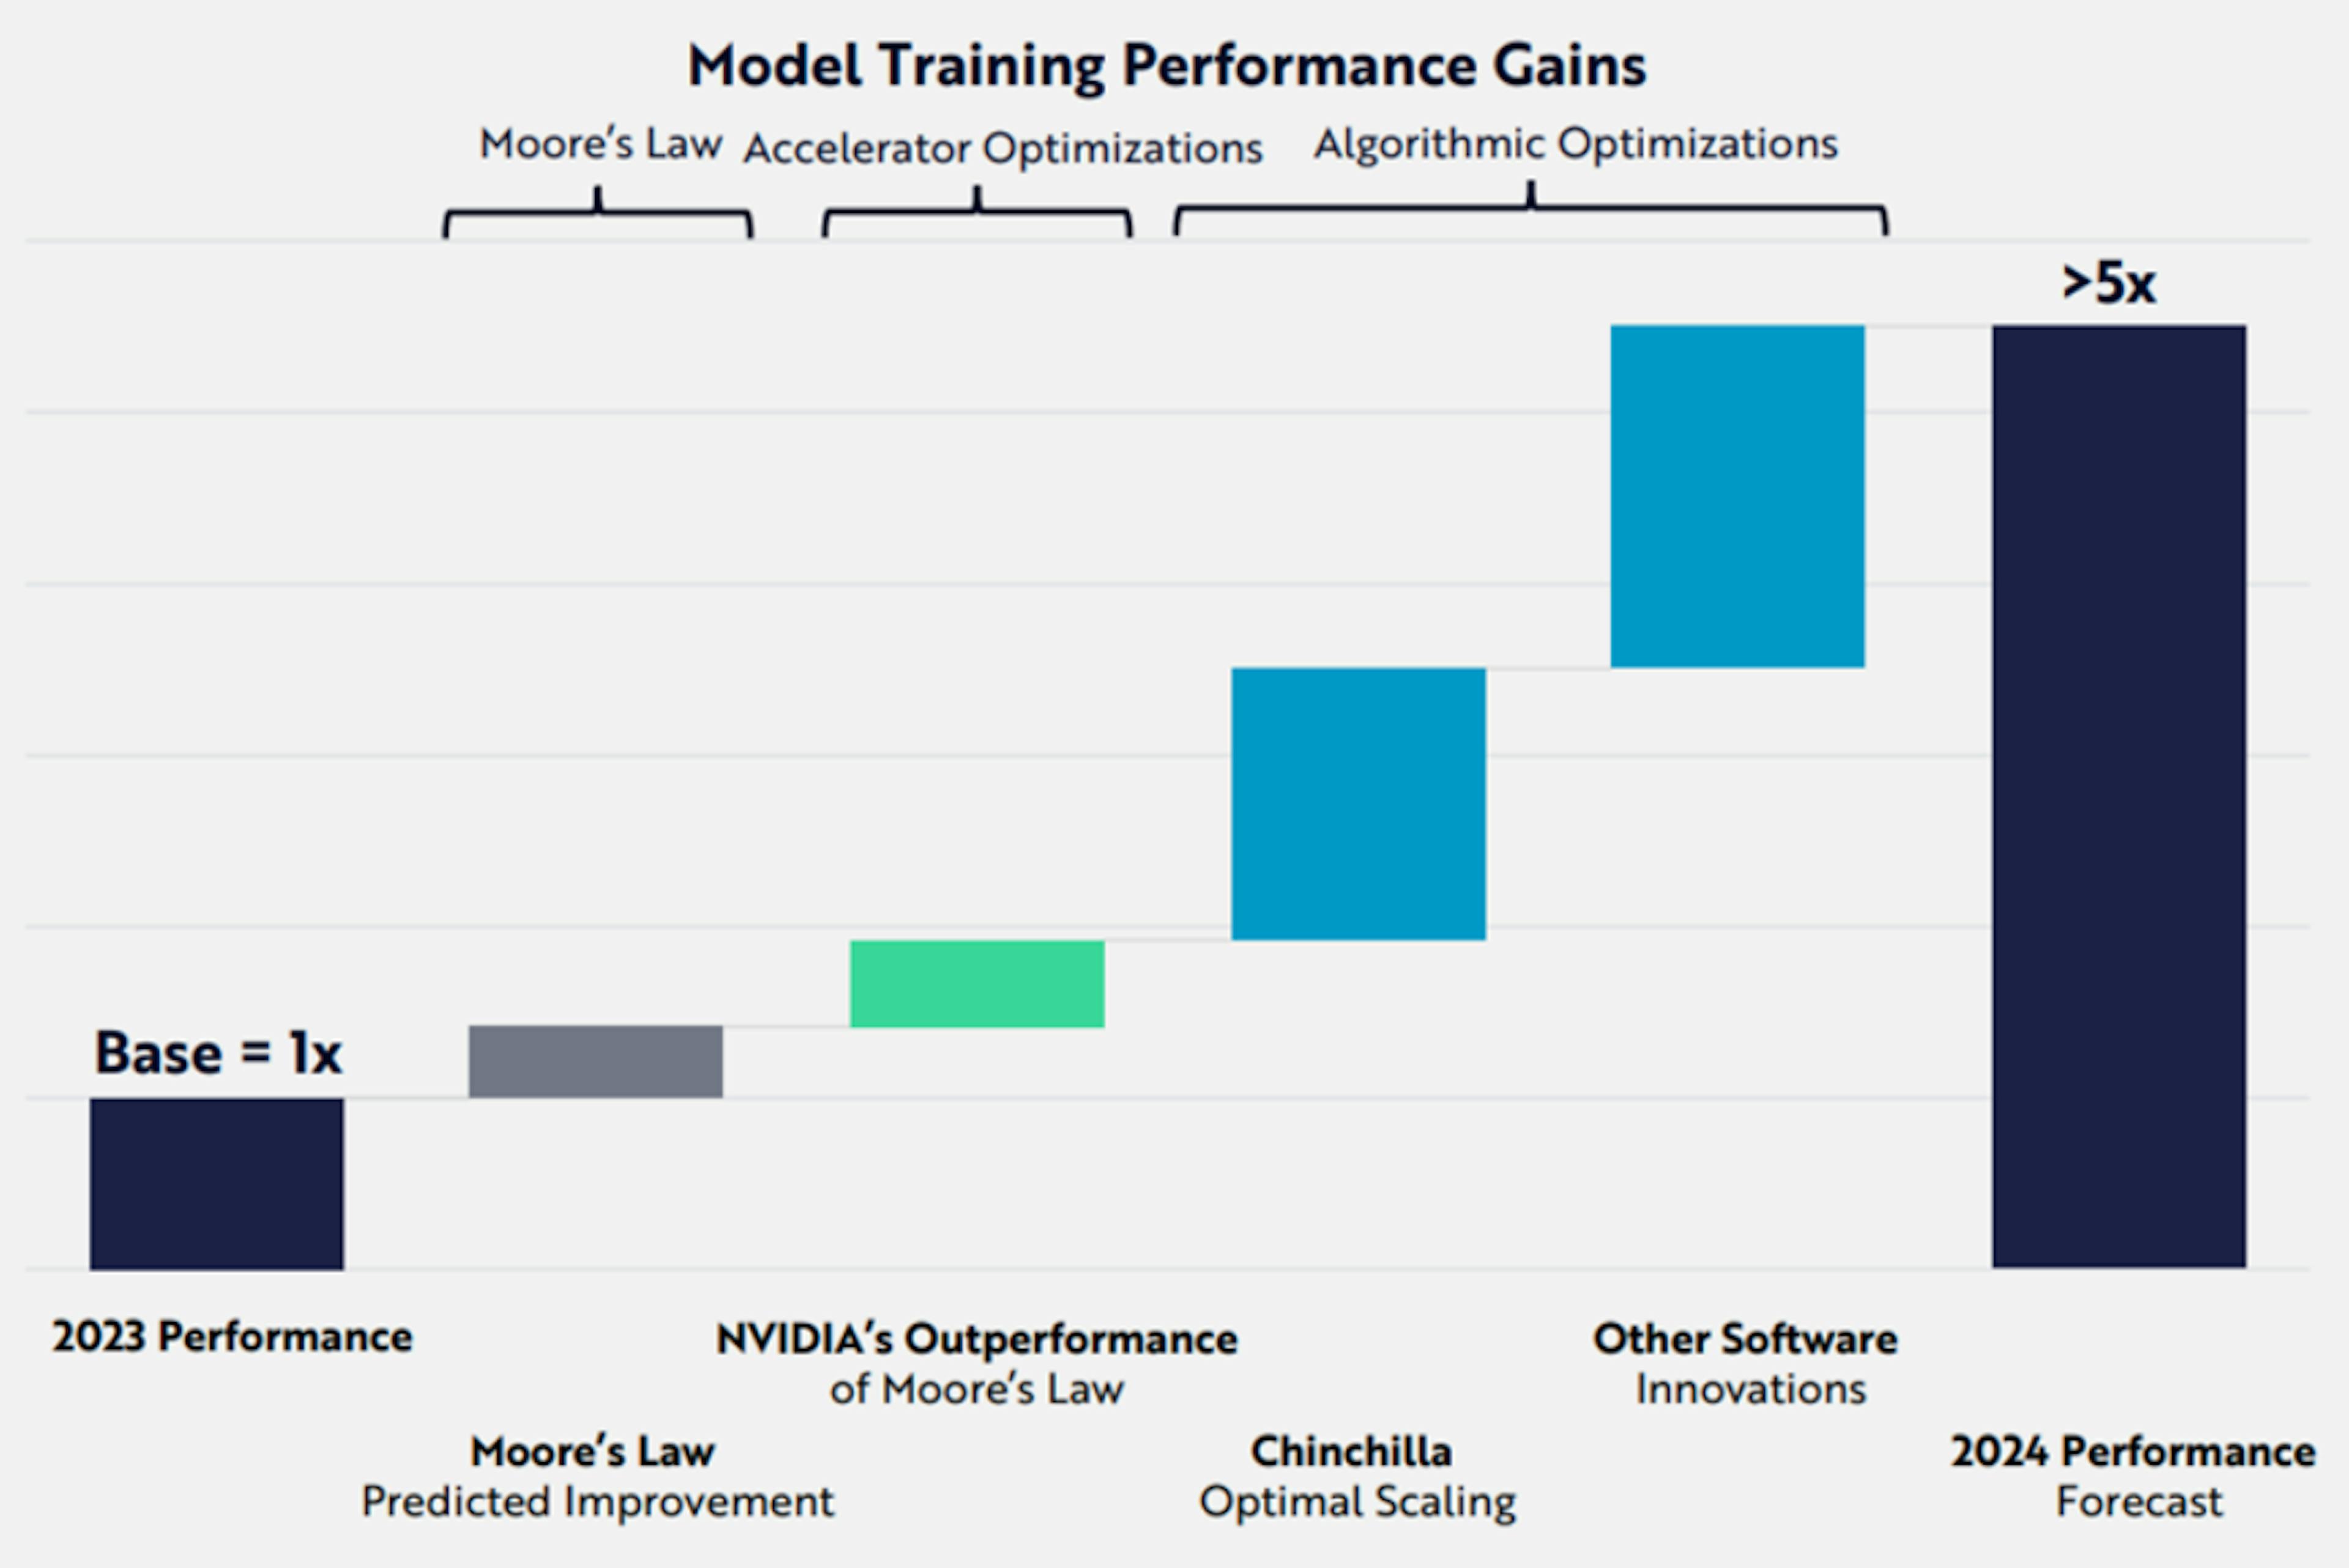 Model training performance gains